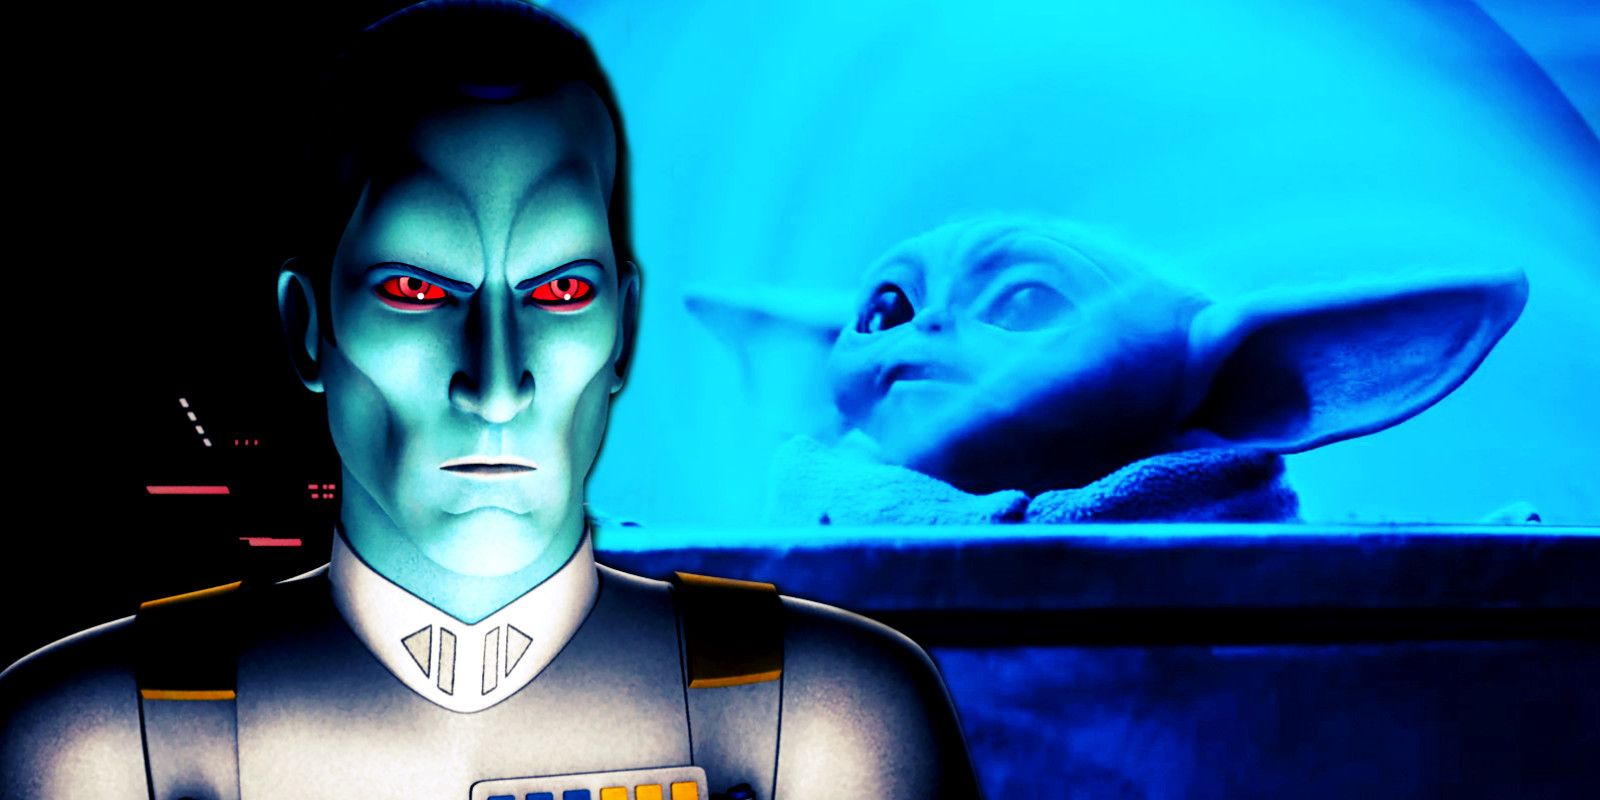 Star Wars Rebels' Grand Admiral Thrawn and Grogu from The Mandalorian season 3.